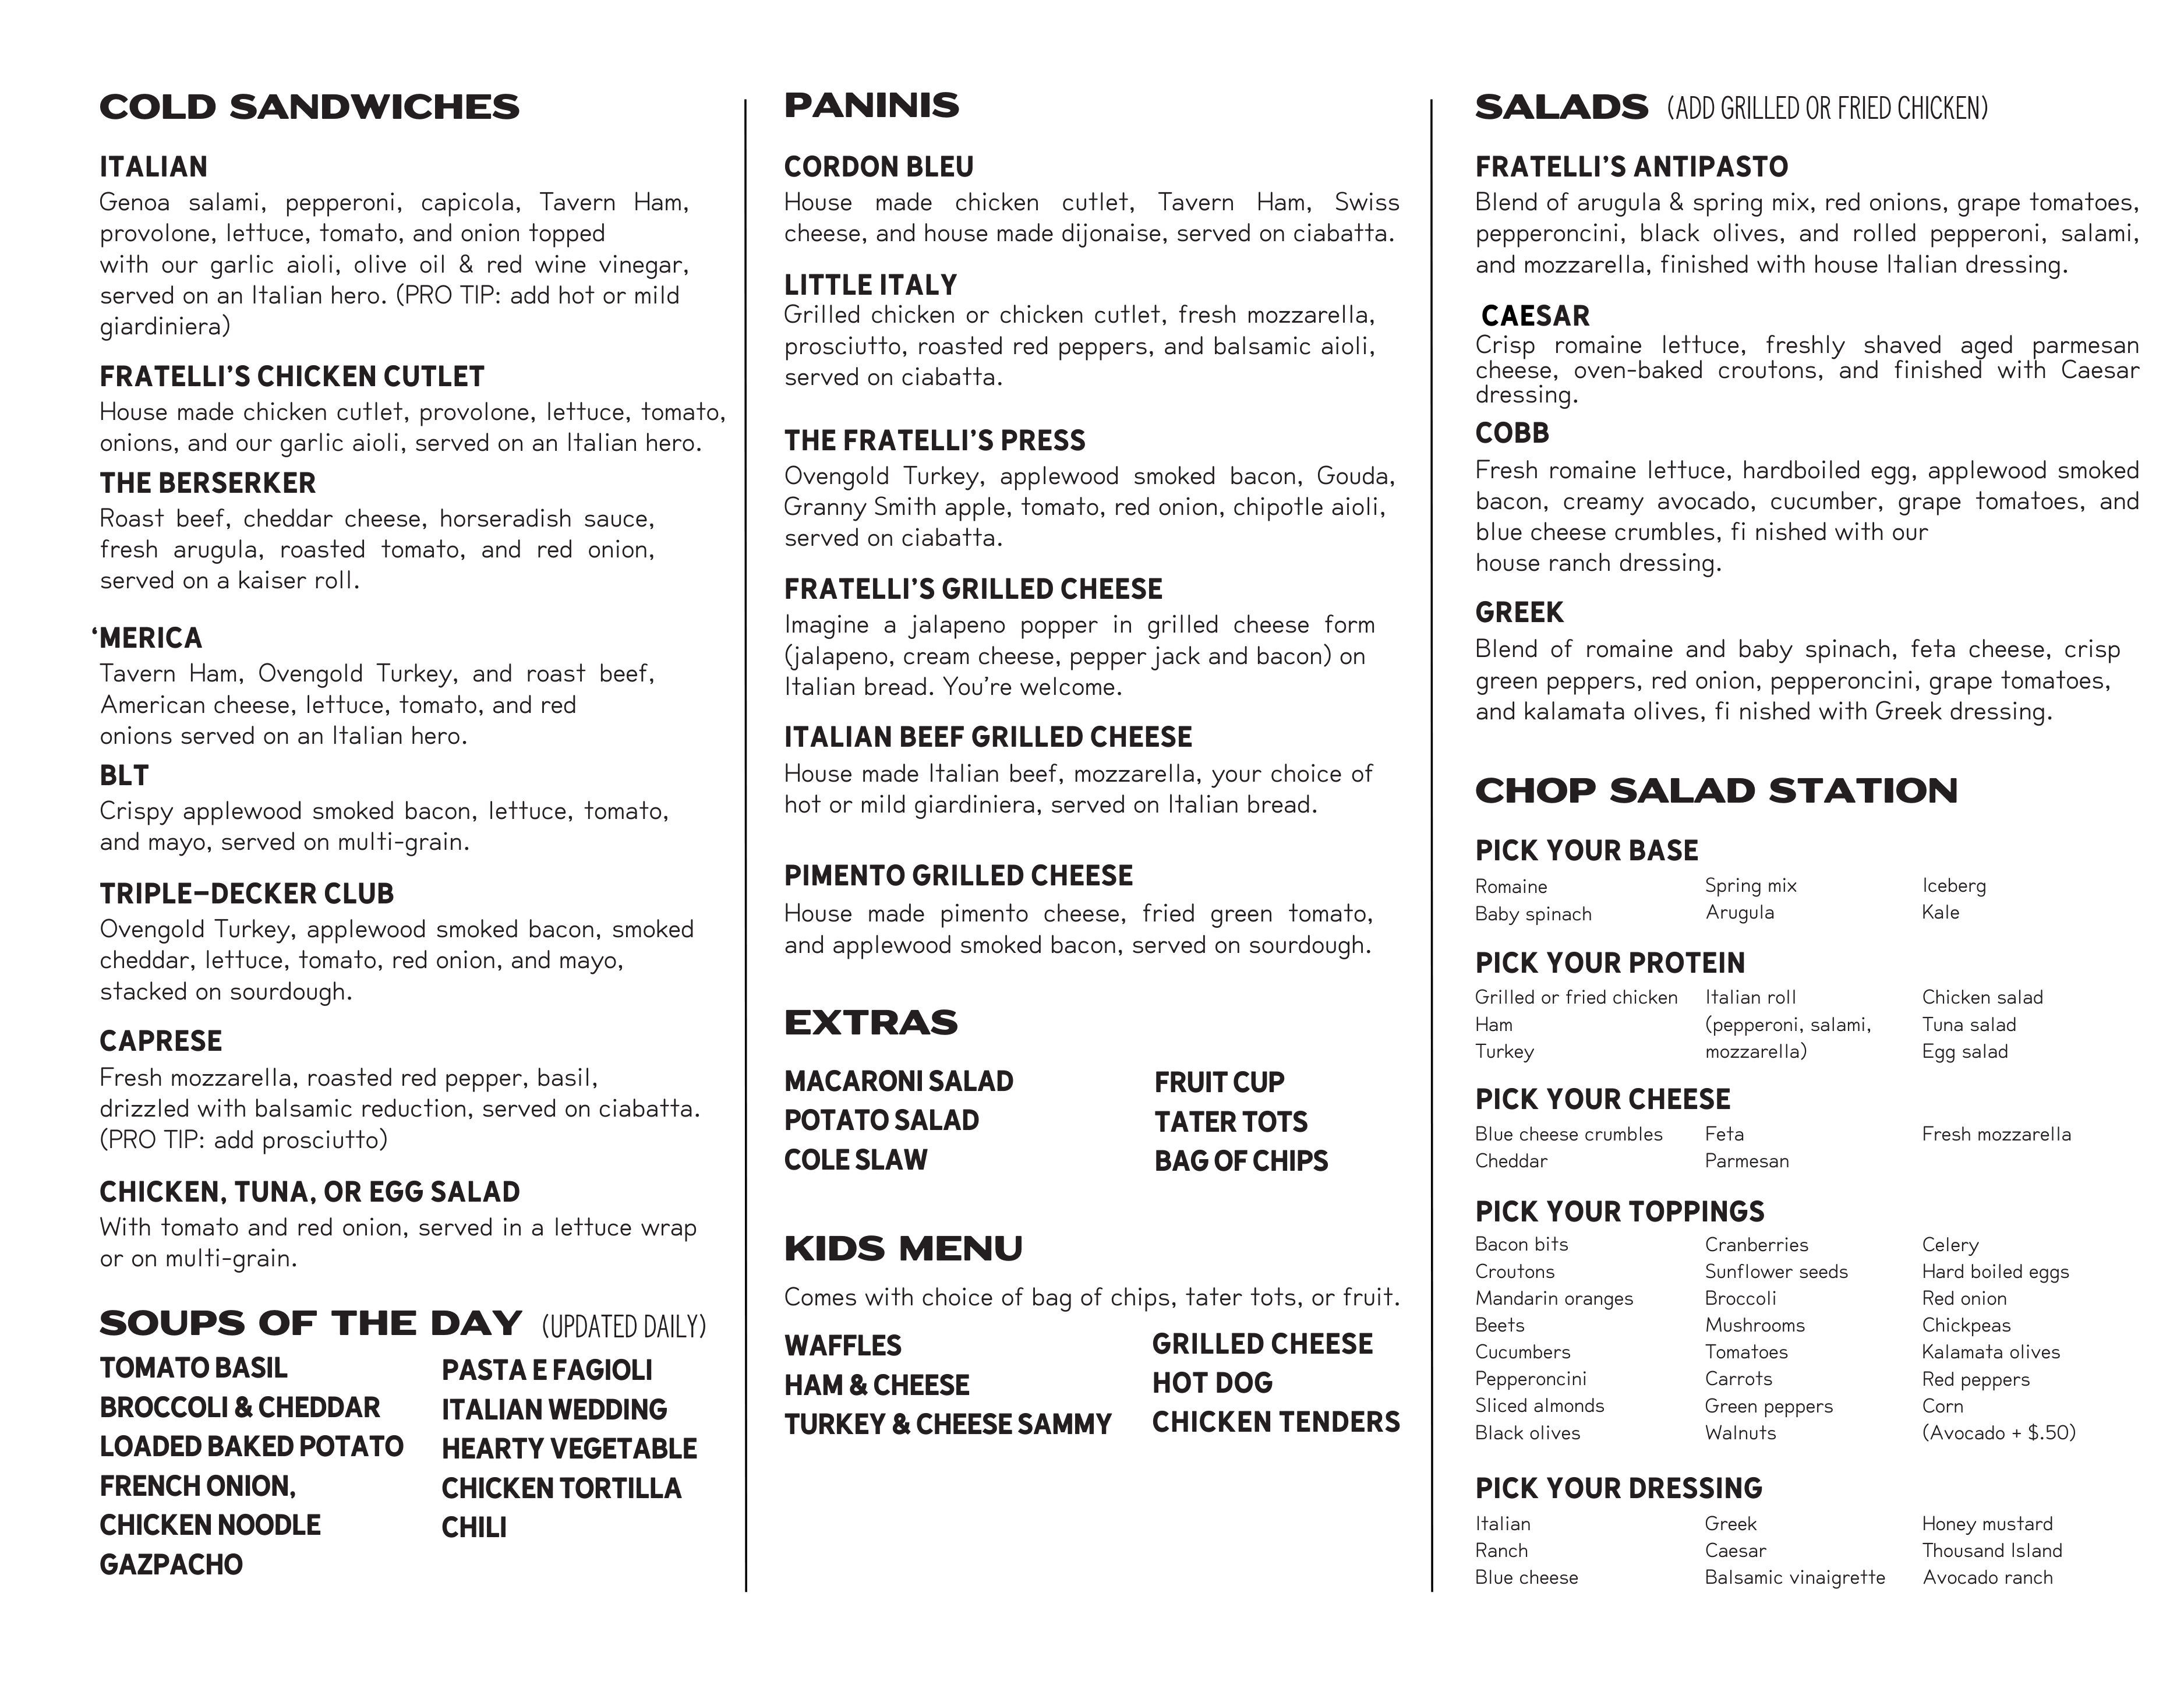 Fratelli's menu page 2